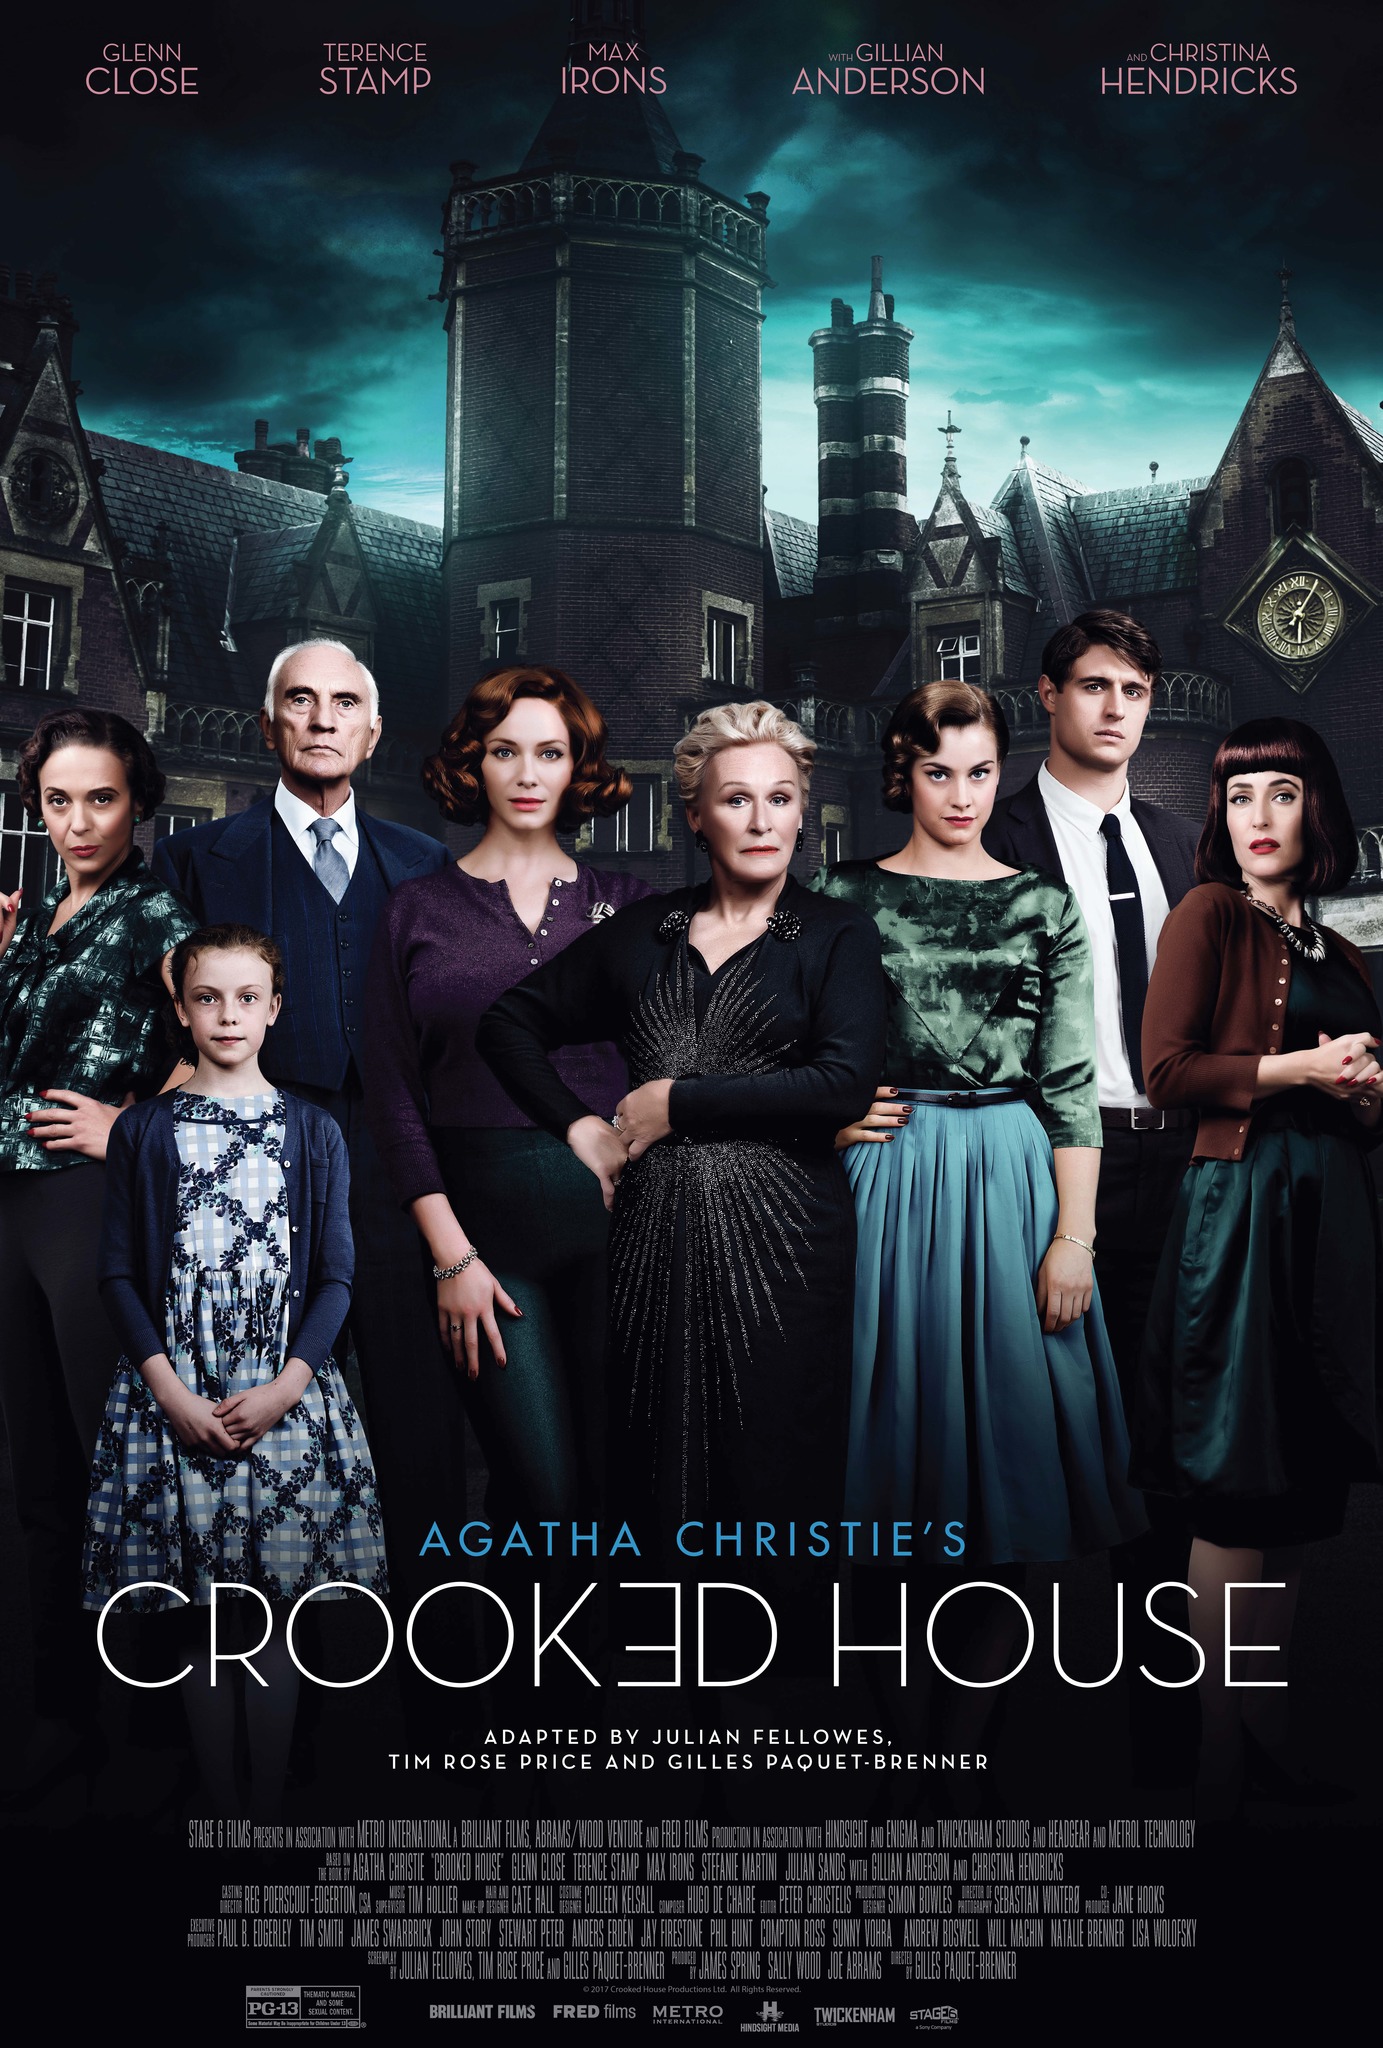 Nonton film Crooked House layarkaca21 indoxx1 ganool online streaming terbaru